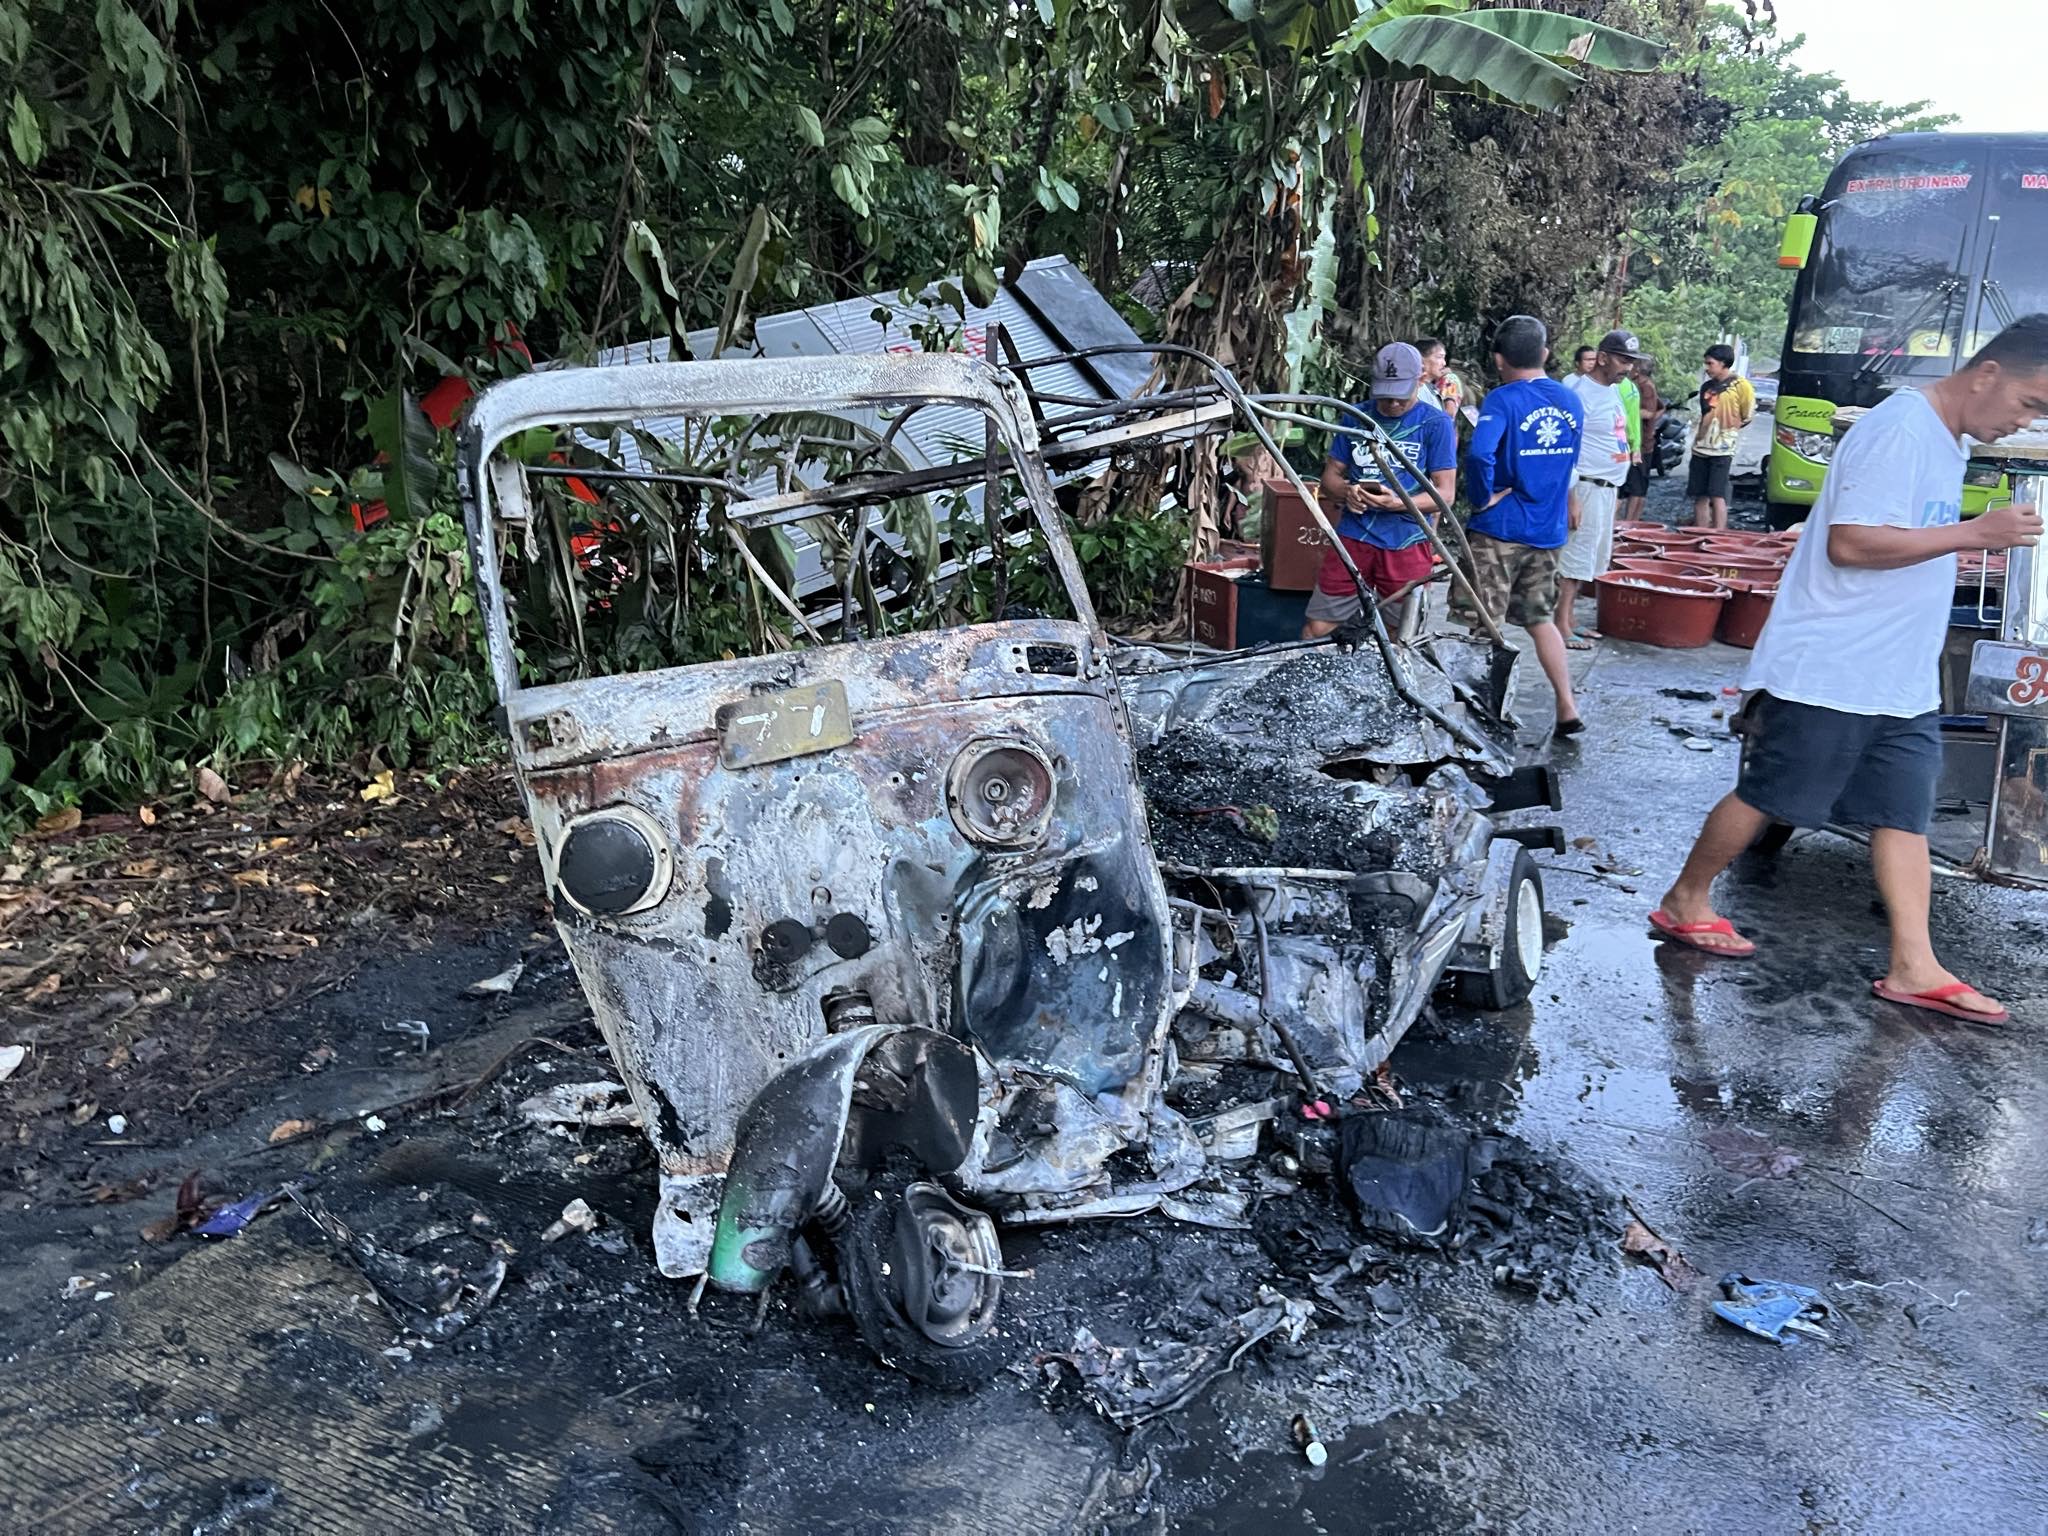 5 dead, 4 injured in three-vehicle crash in Philippines